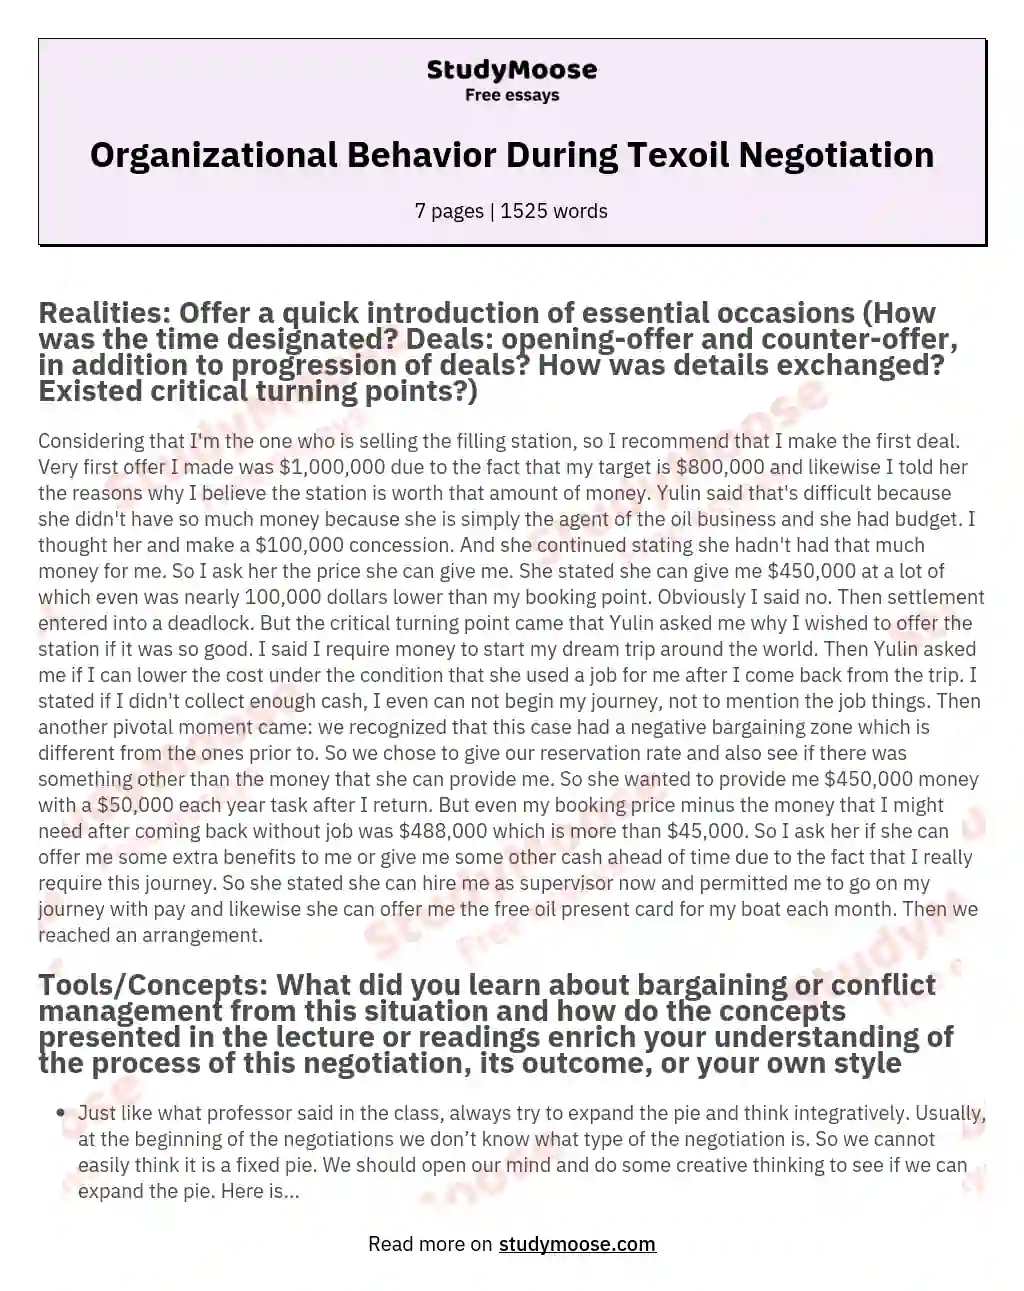 Organizational Behavior During Texoil Negotiation essay